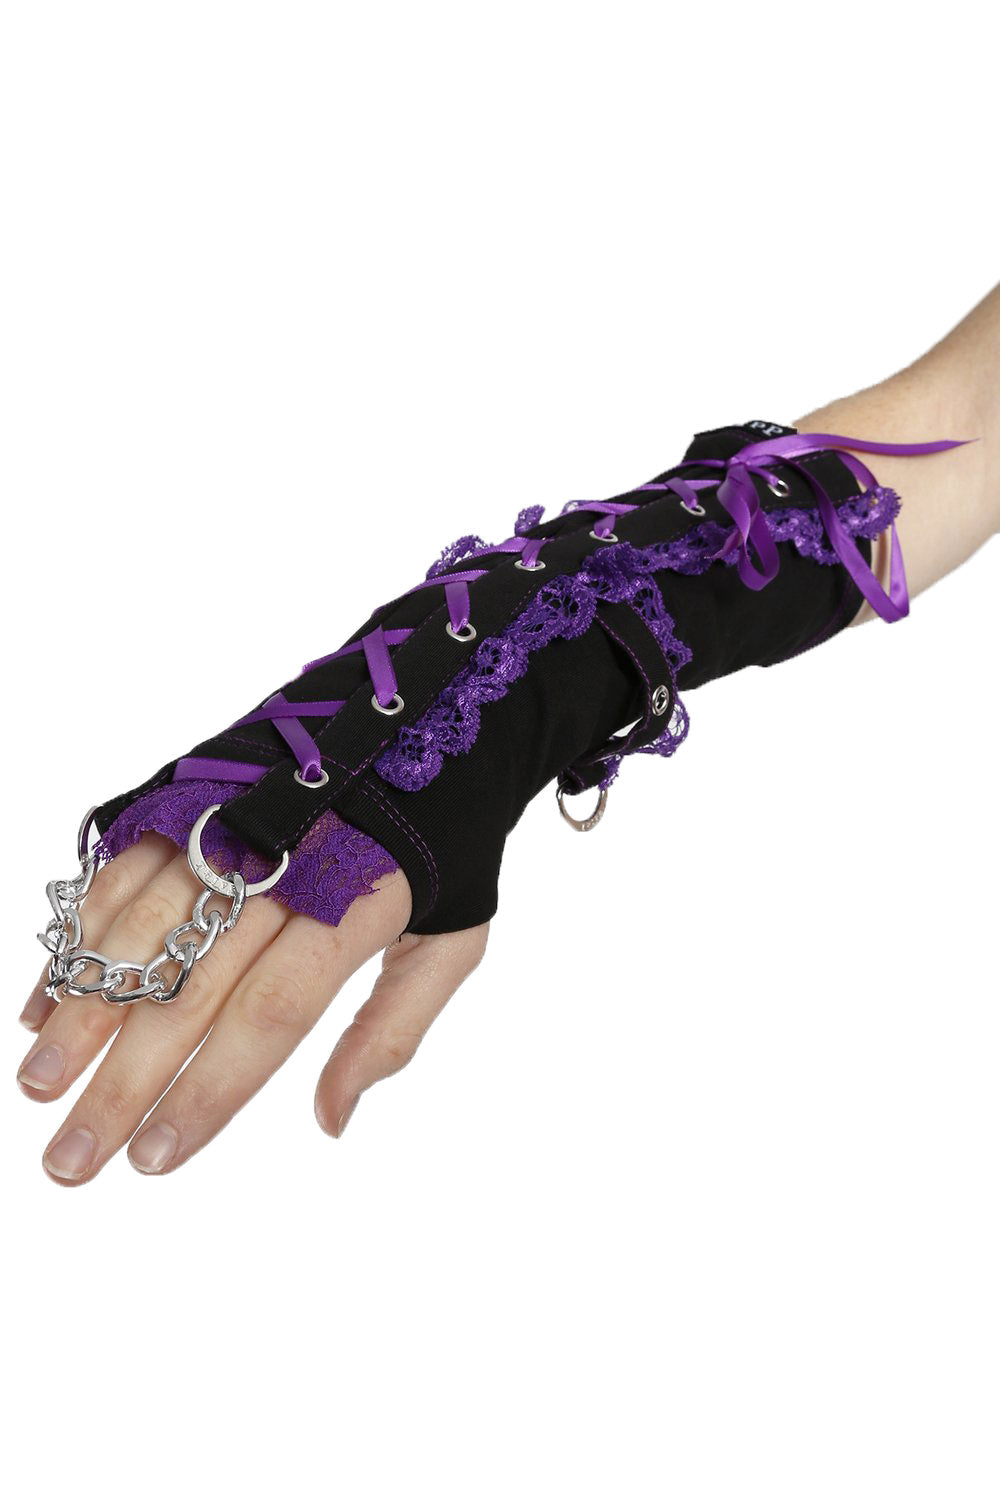 Tripp Lolita Lace and Chain Arm Warmers [Black/Purple]